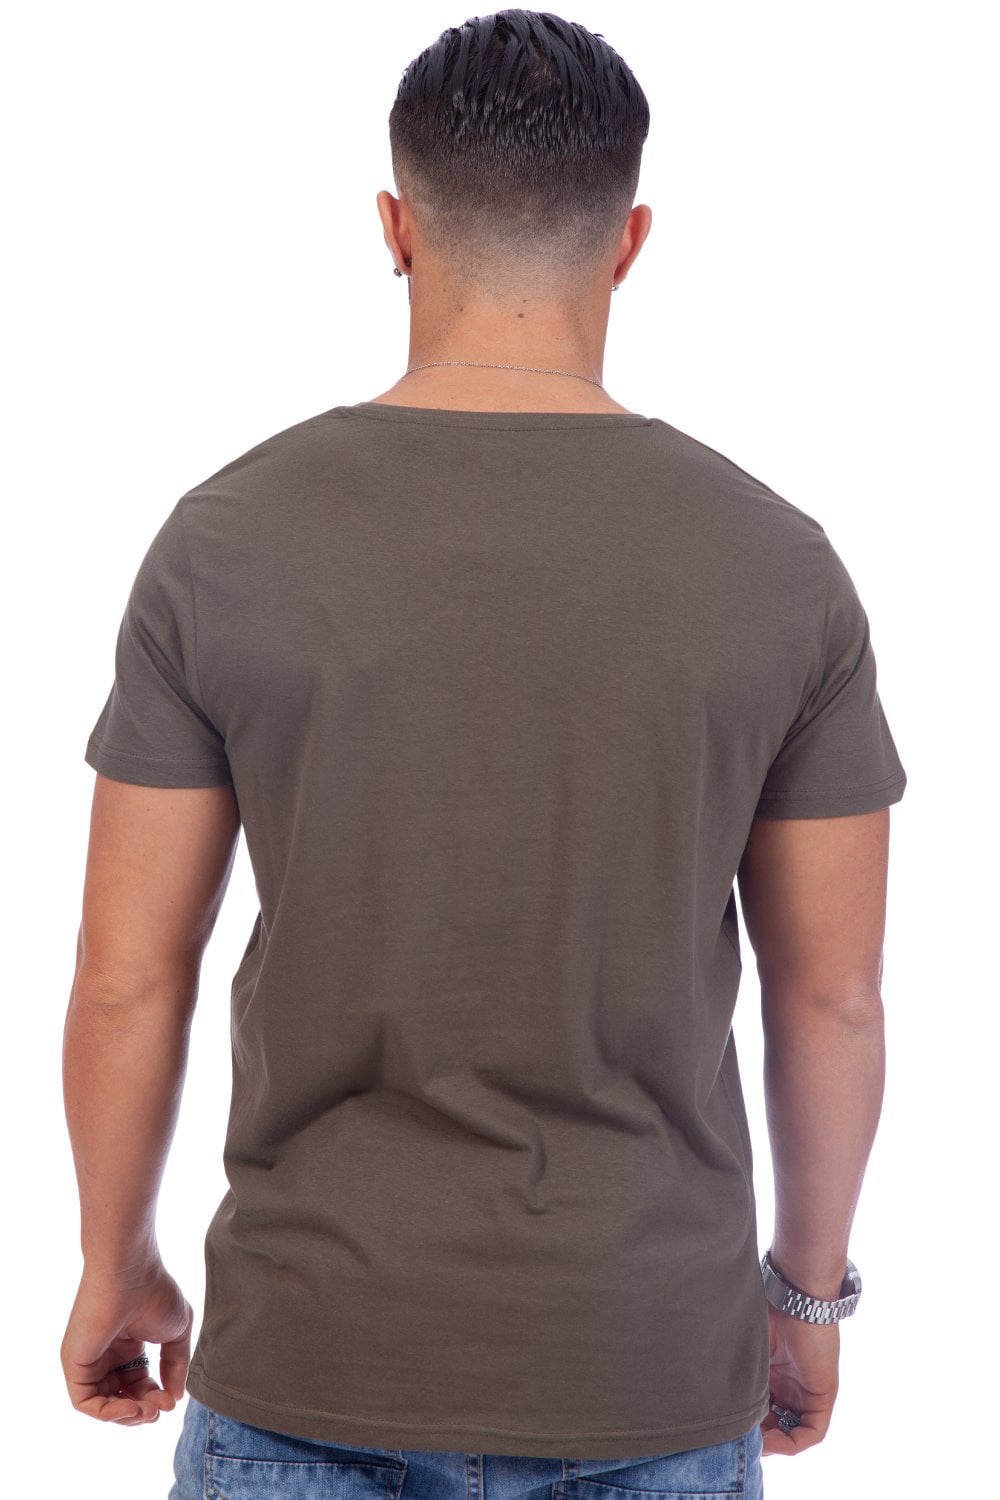 Lion T-Shirt - Twisted Soul | Men's Clothing